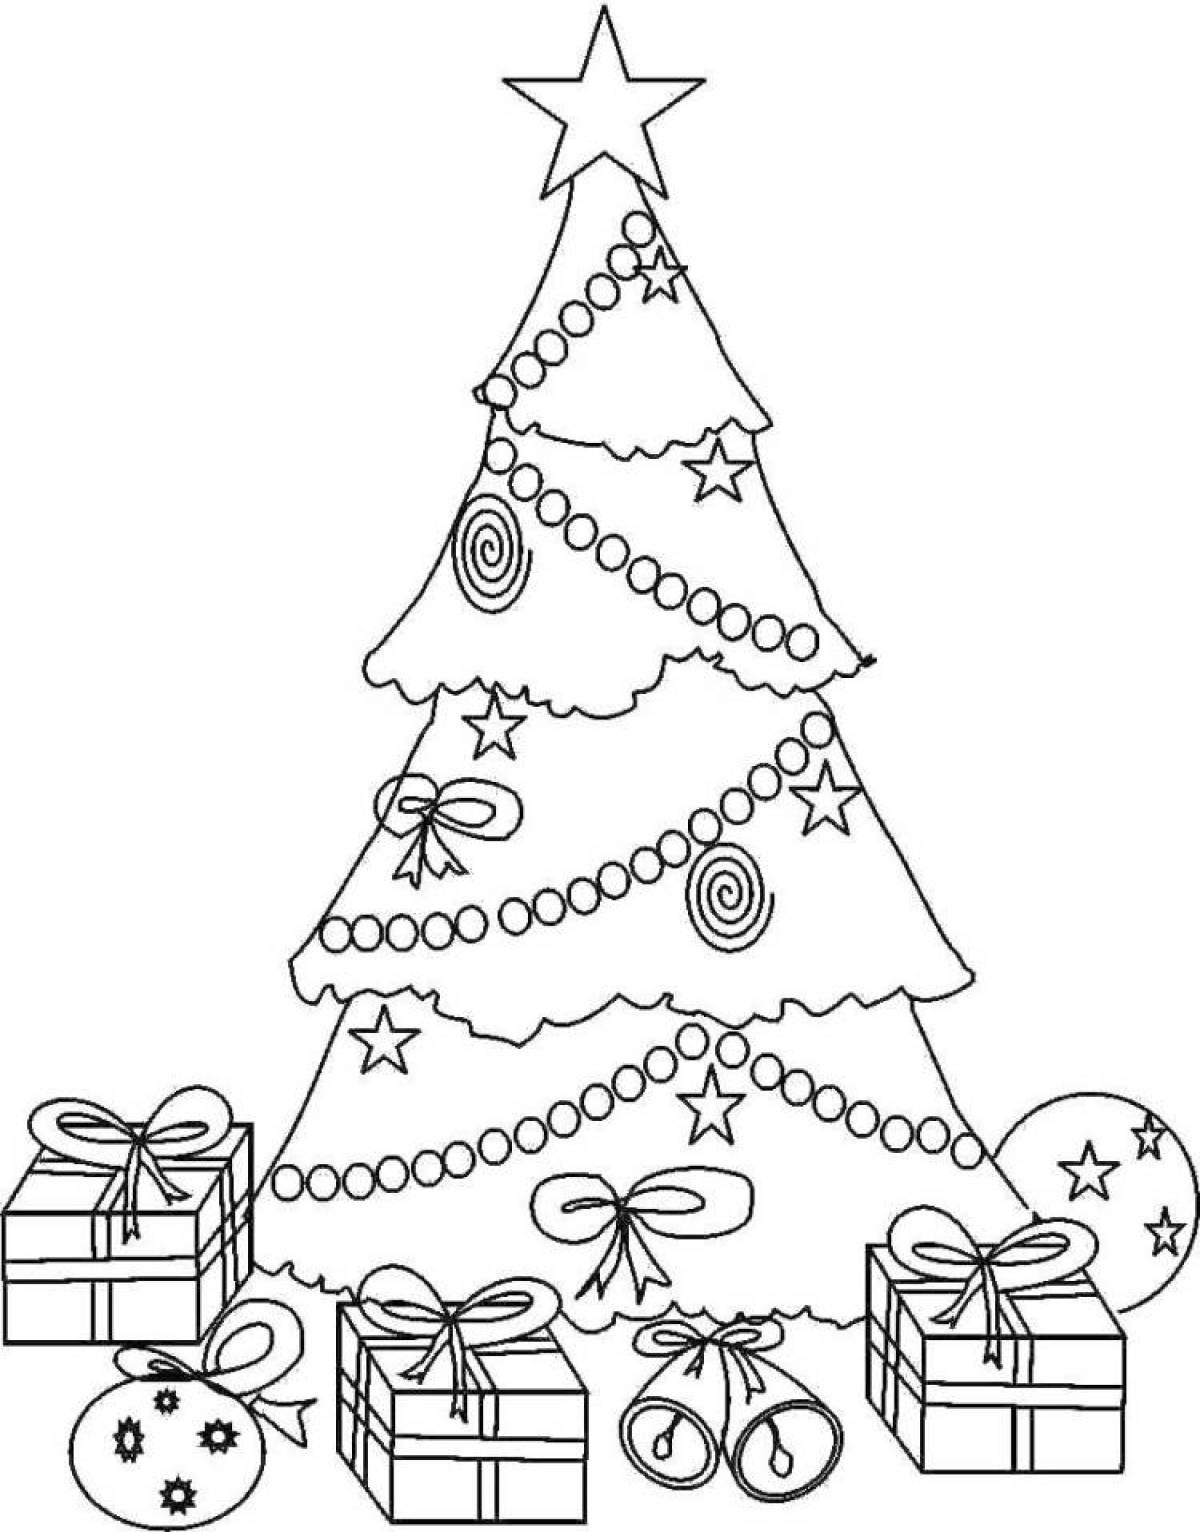 Joyful Christmas tree with toys